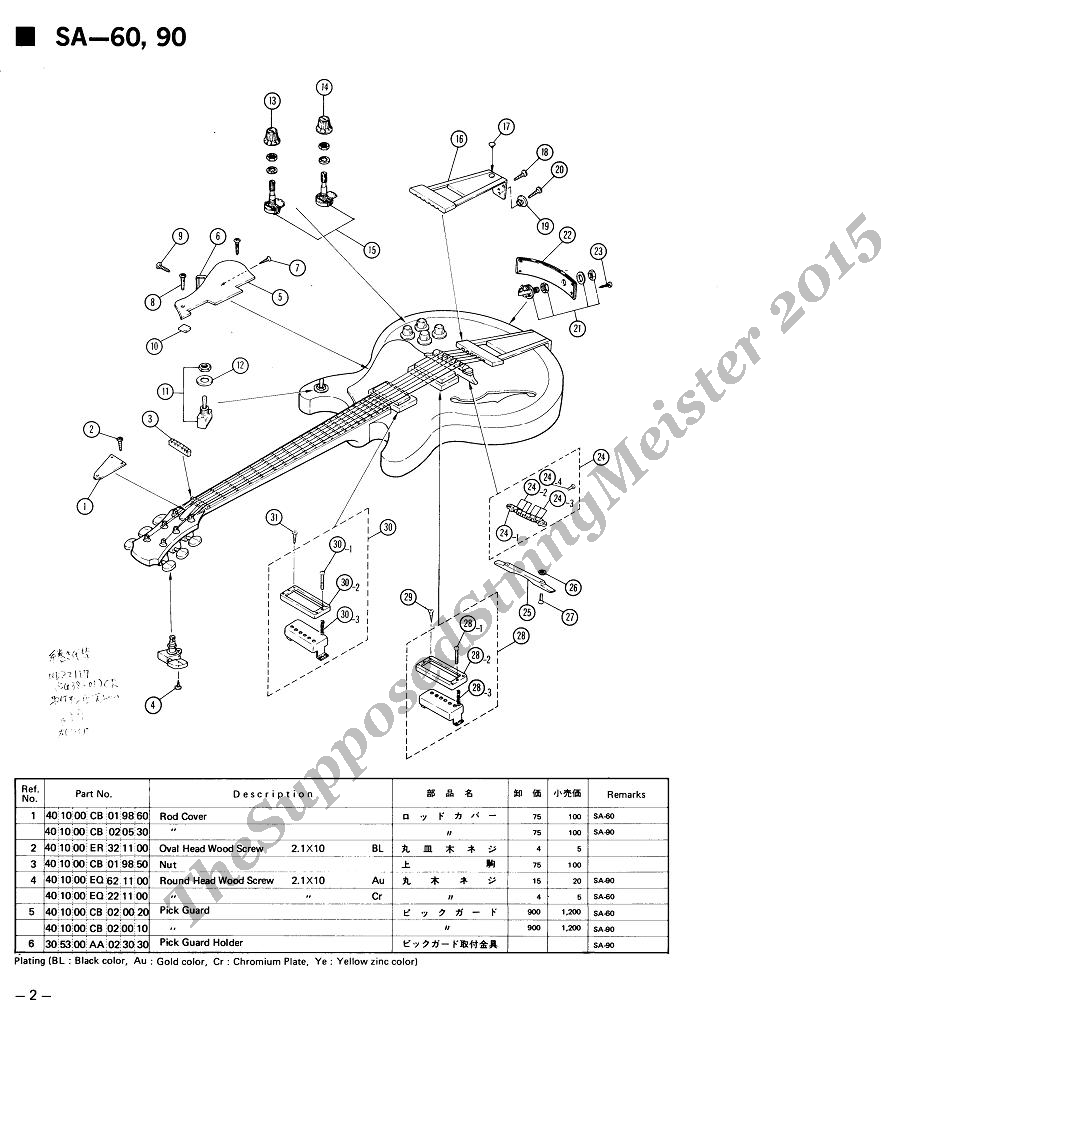 Electric Guitar SA-60-75-90 Parts List - Page 2